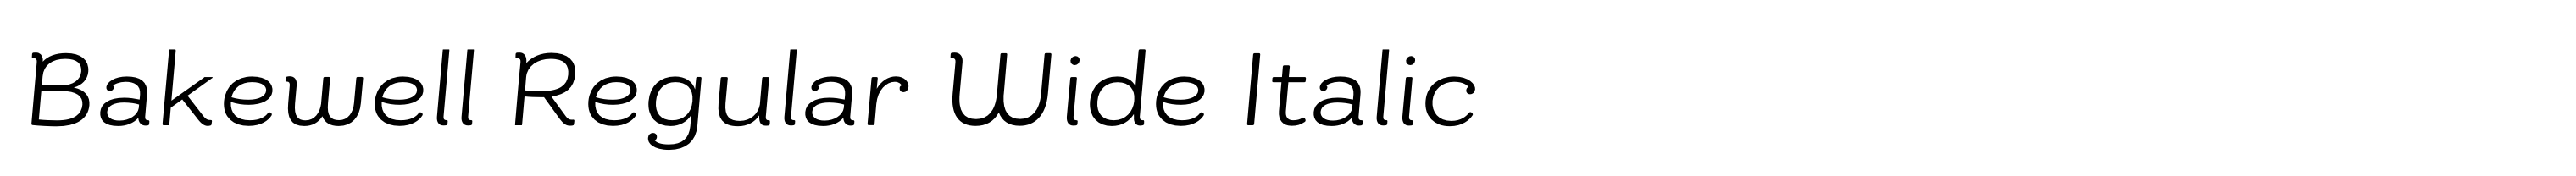 Bakewell Regular Wide Italic